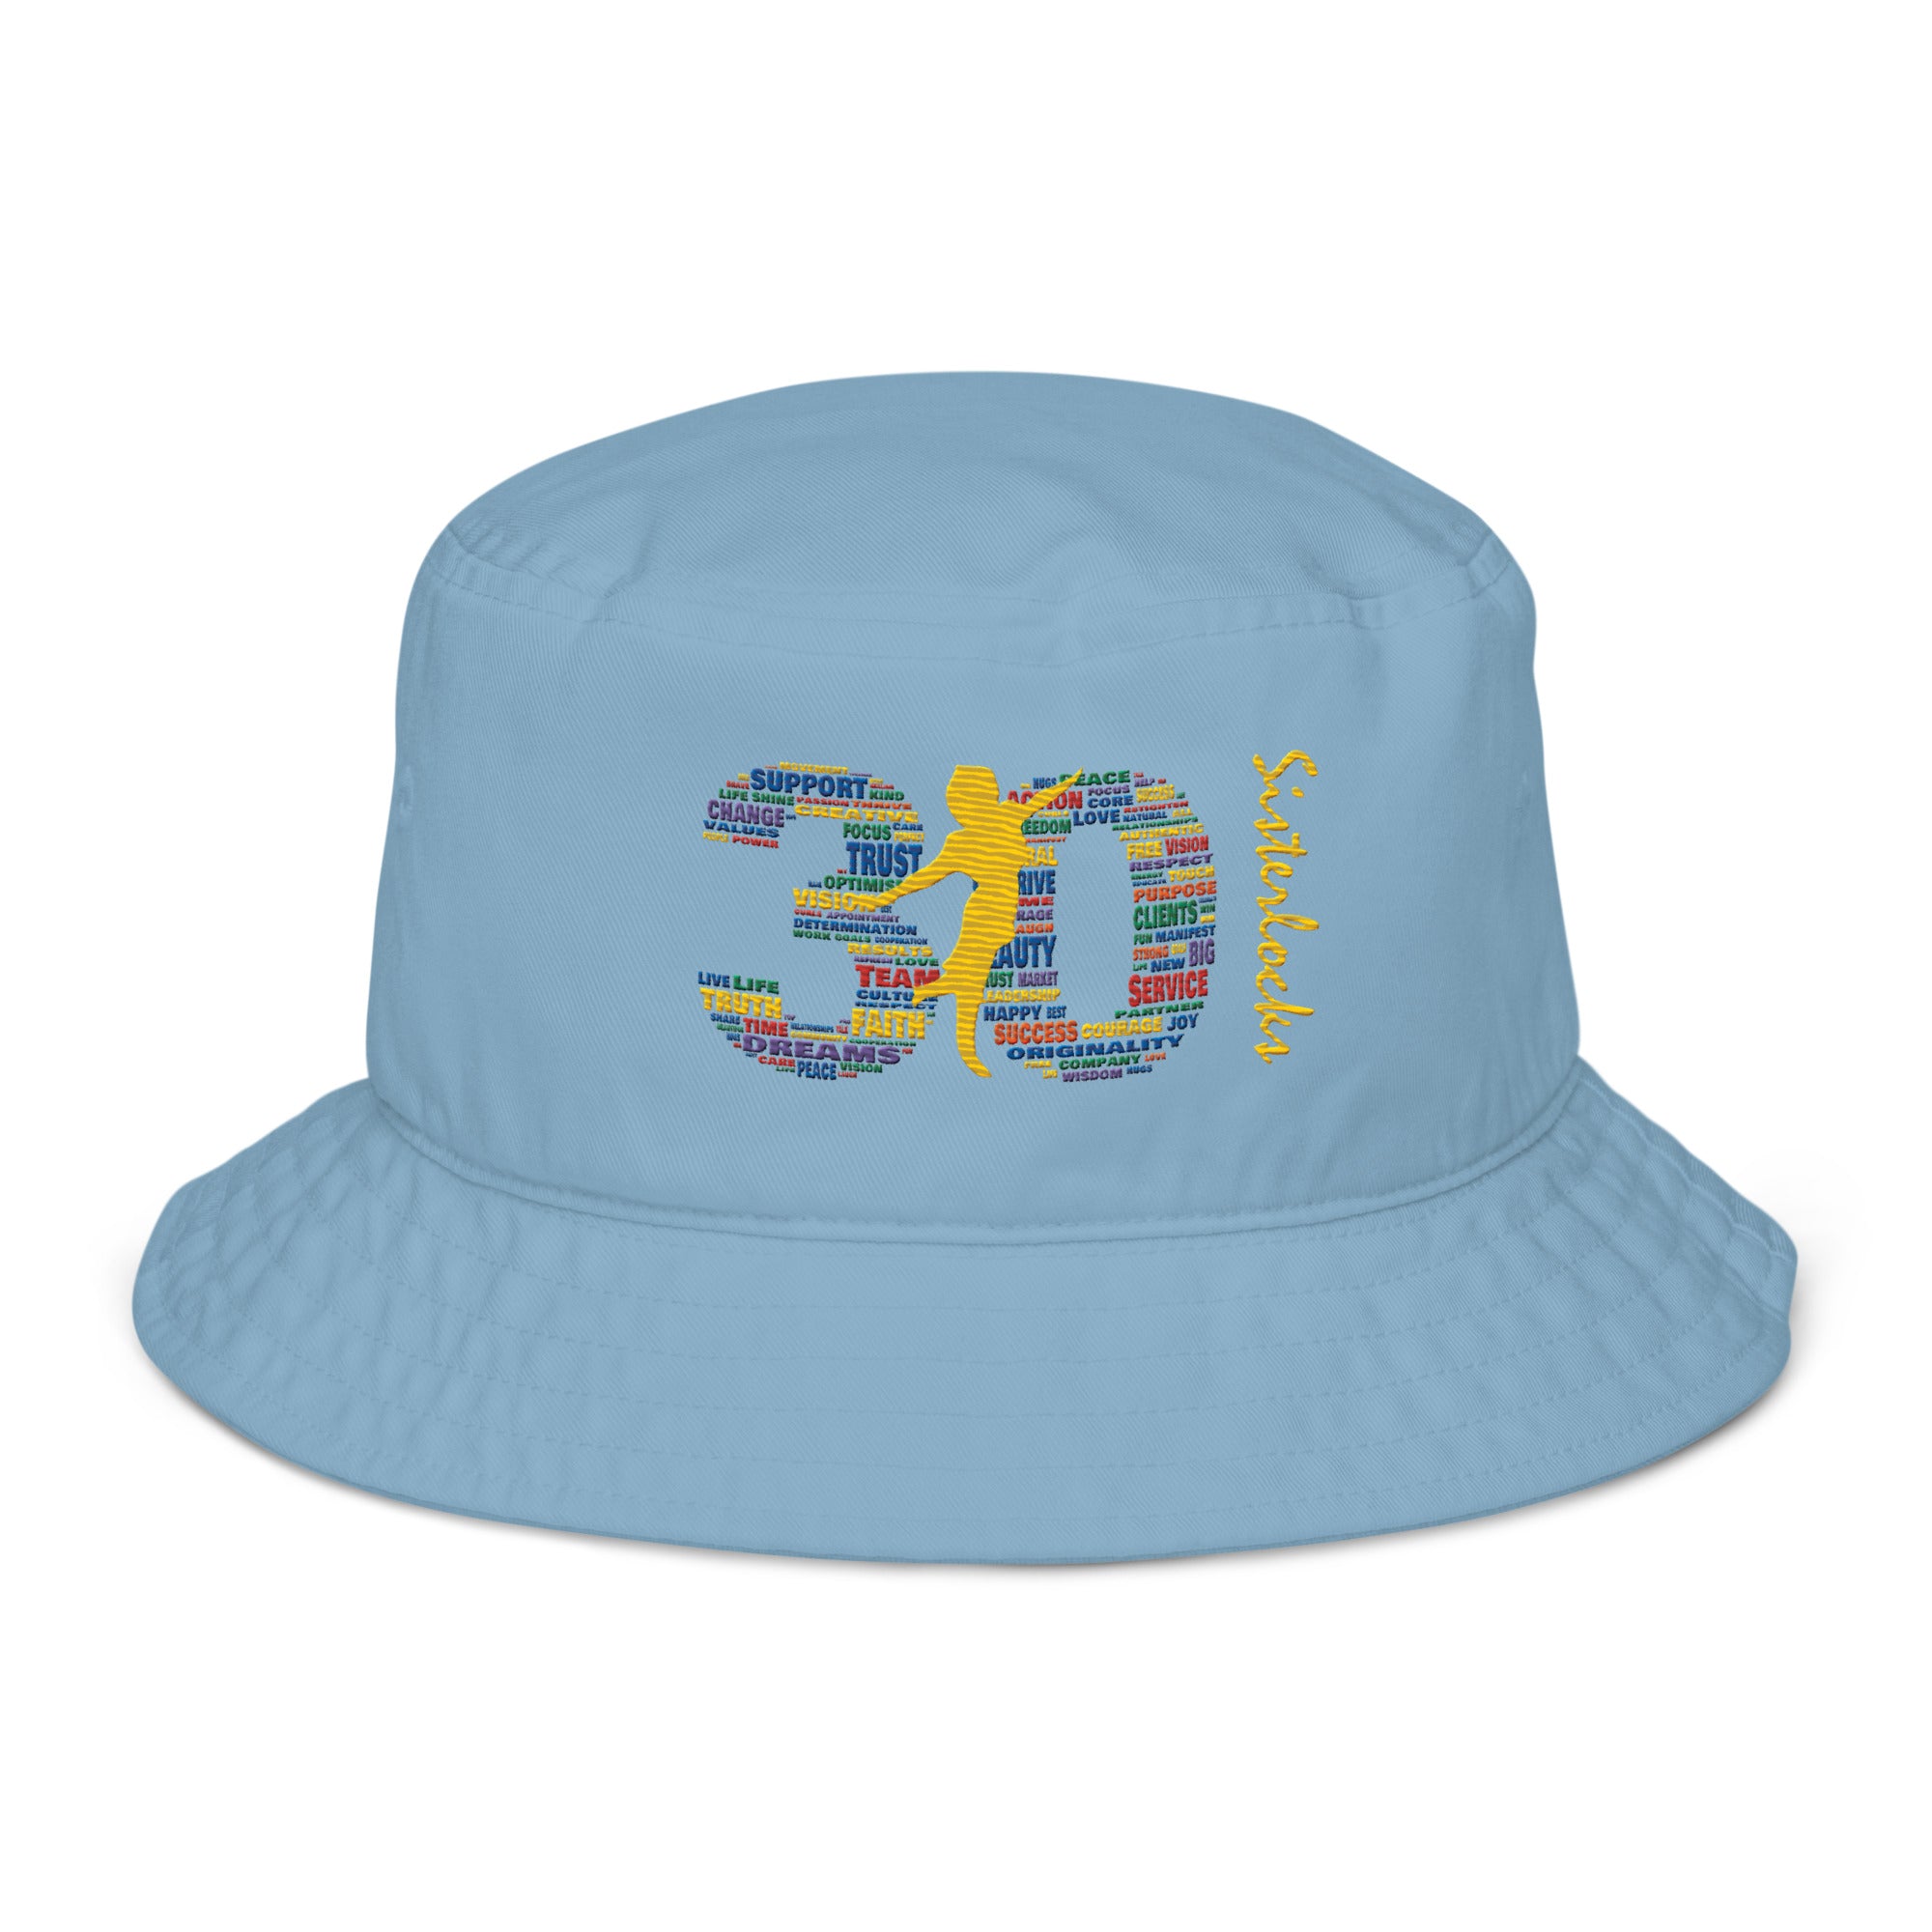 Sisterlocks 30th Anniversary Embroidered Bucket Hat (Multiple Colors)